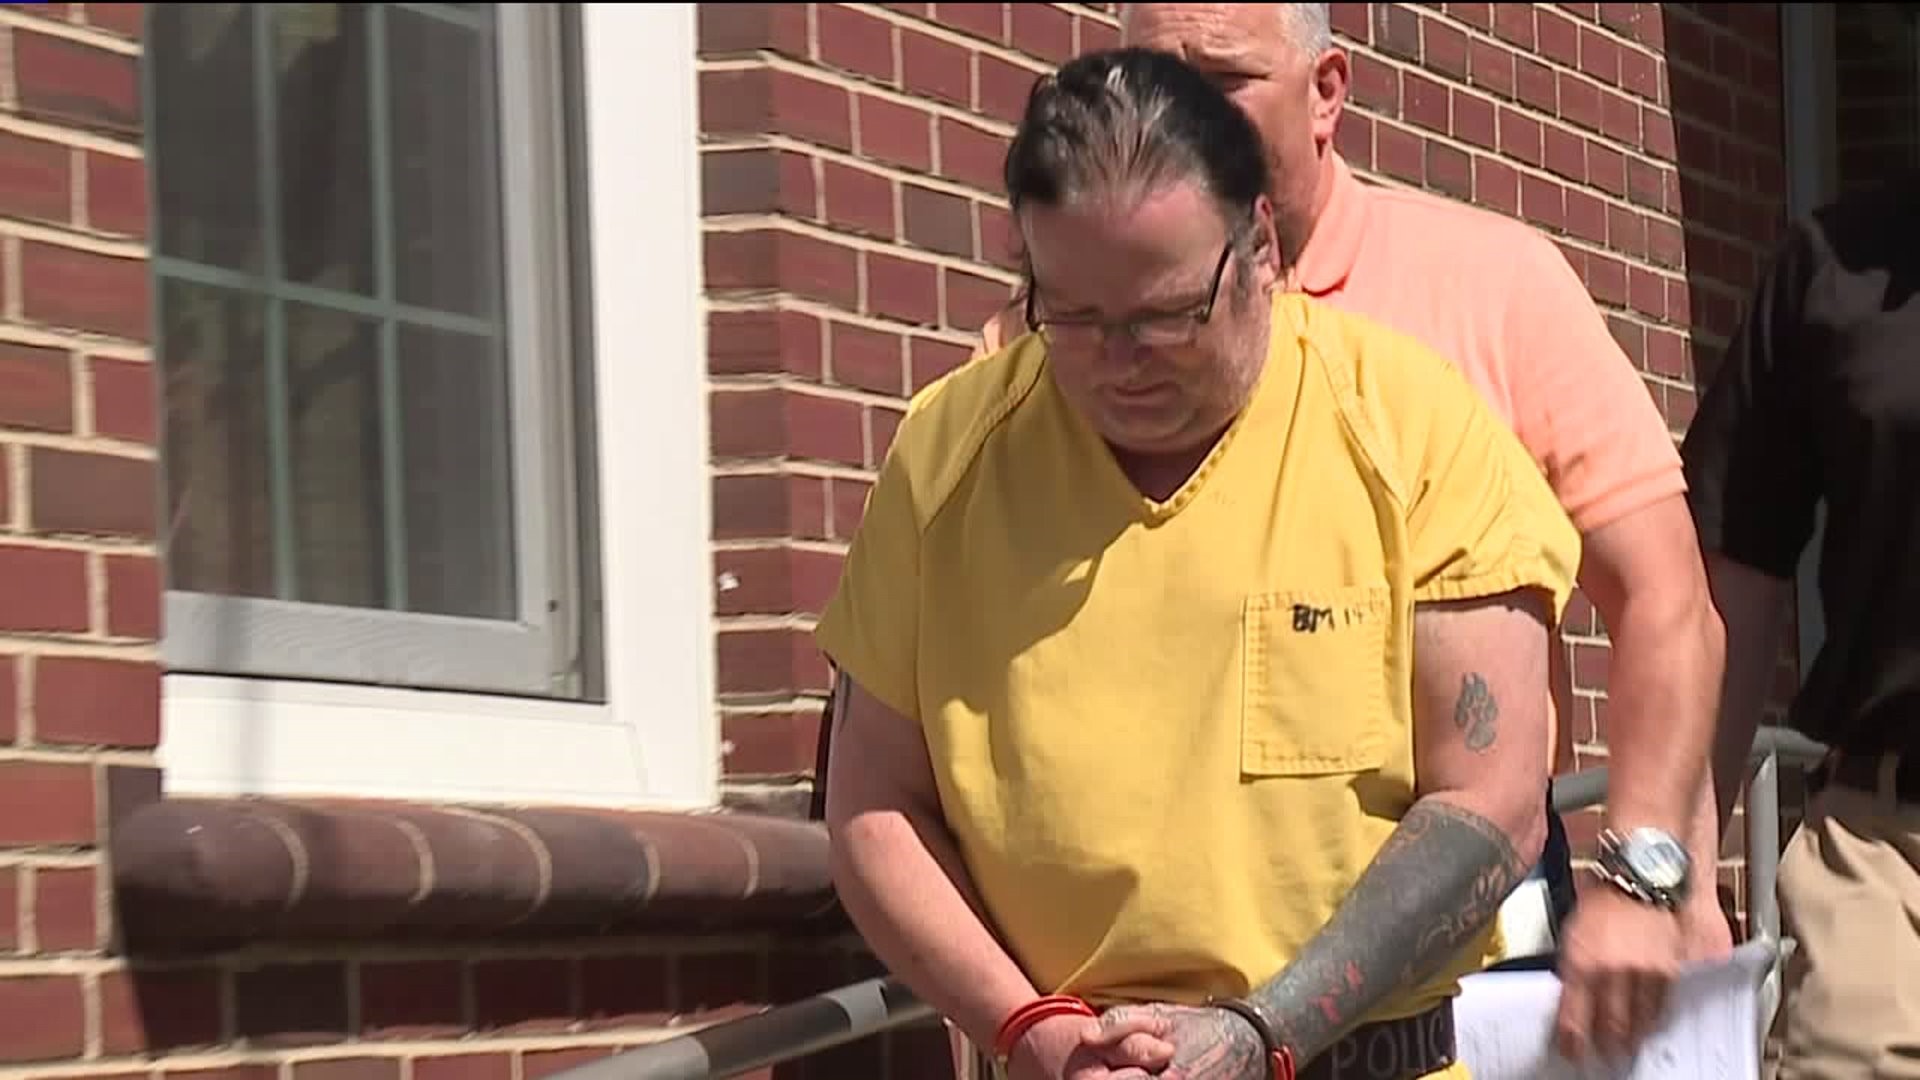 Man Sent to Prison for Child Sex Assault